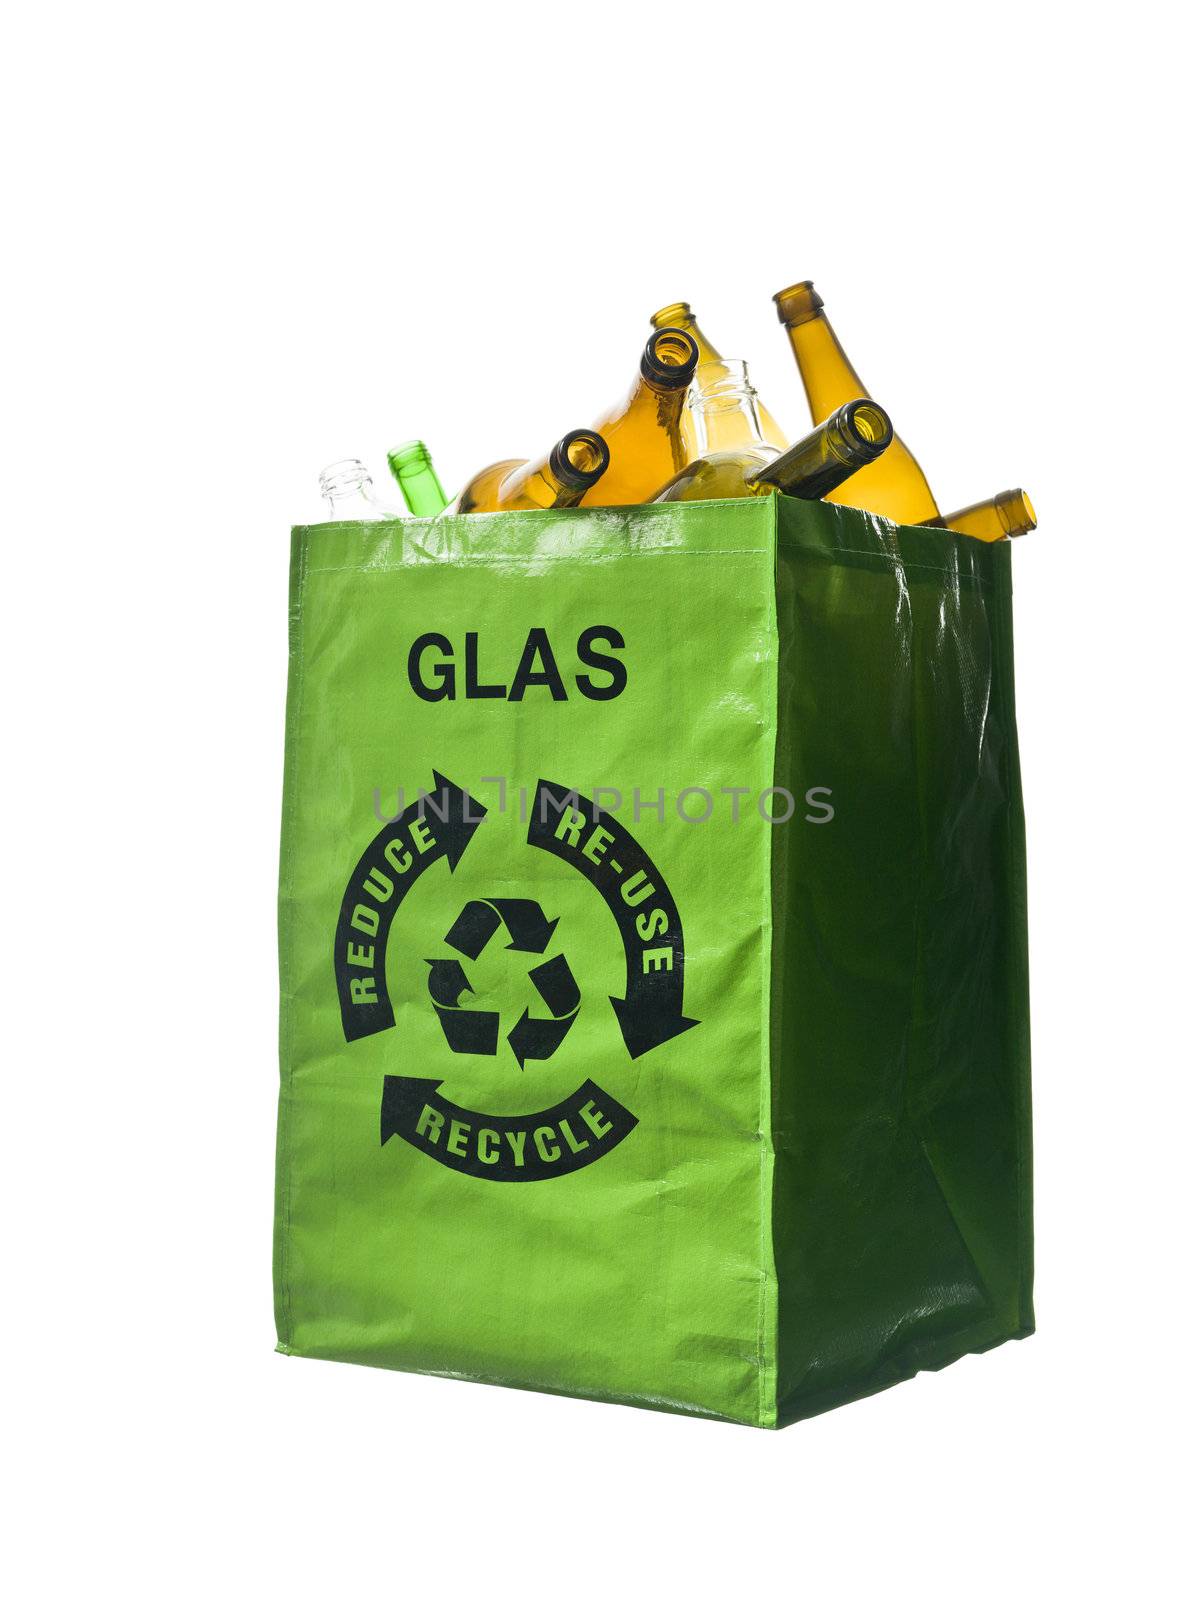 Glass Recycling by gemenacom